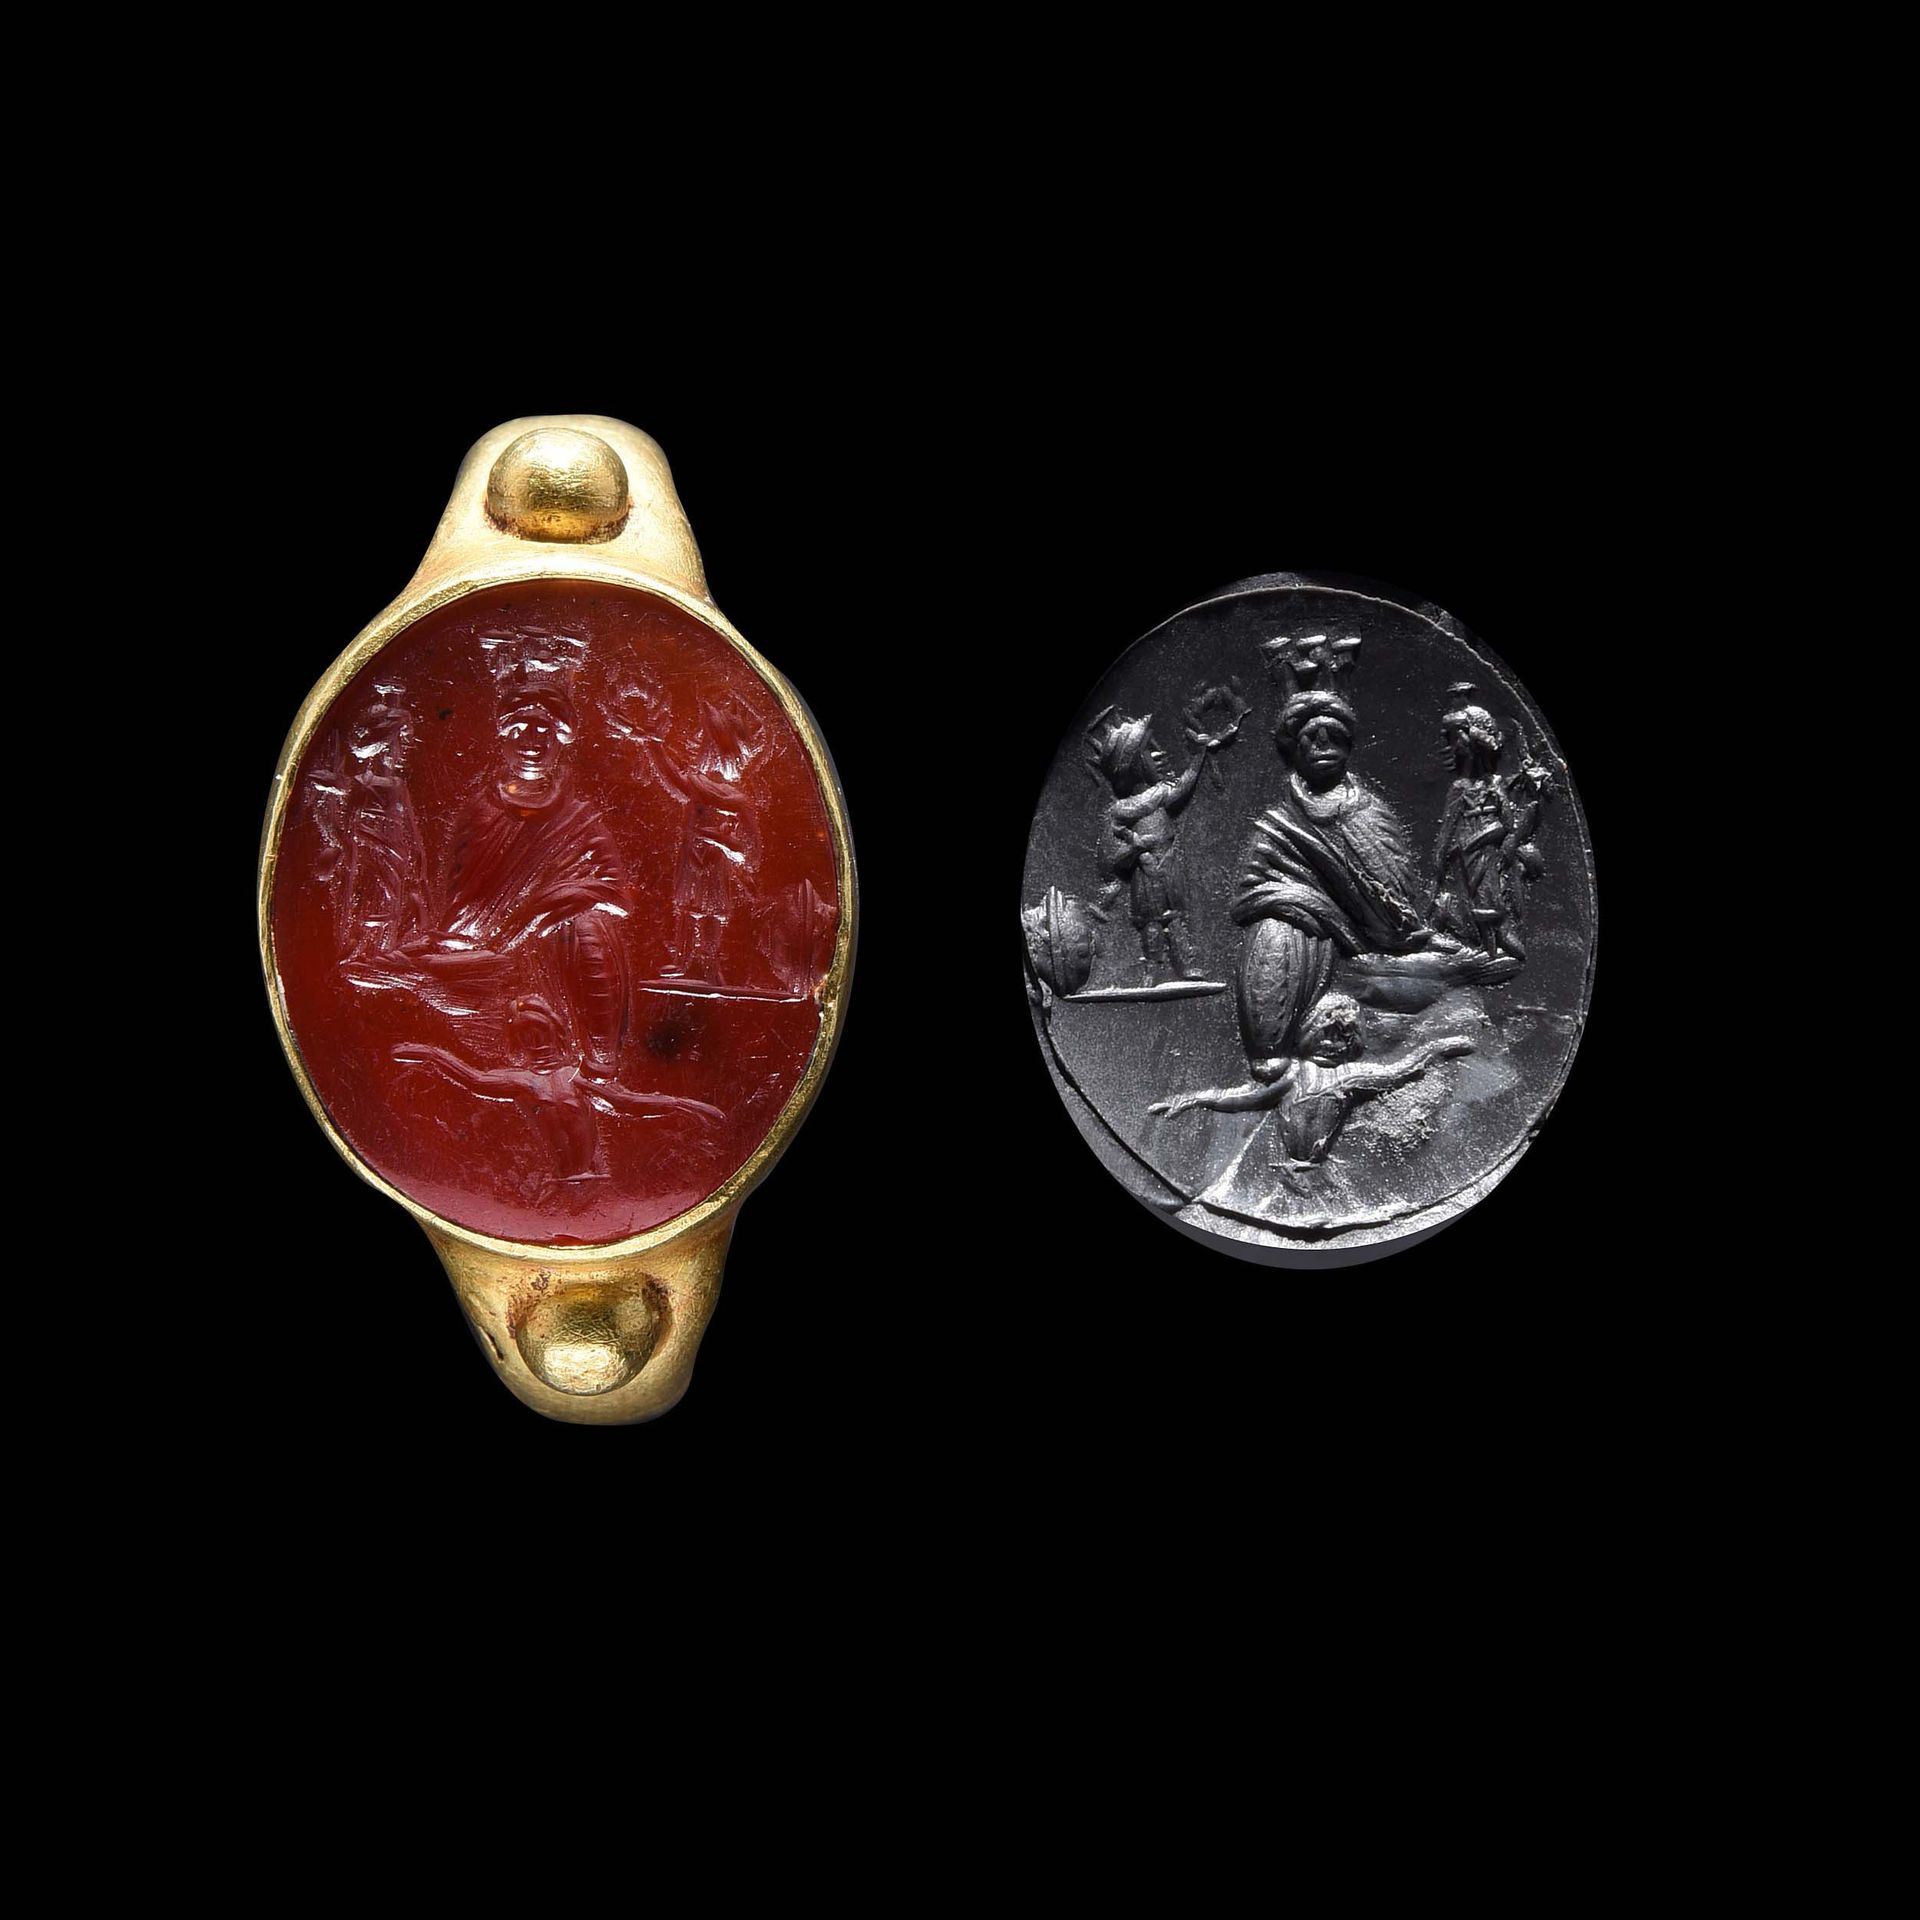 Null 镶嵌有凹版的戒指

东罗马艺术，1-2世纪。

罗马金戒指，上面镶嵌着红玉髓上的凹刻图案。

安提阿的泰切被奥伦提斯河挡住了去路，被包围了。

火星和&hellip;